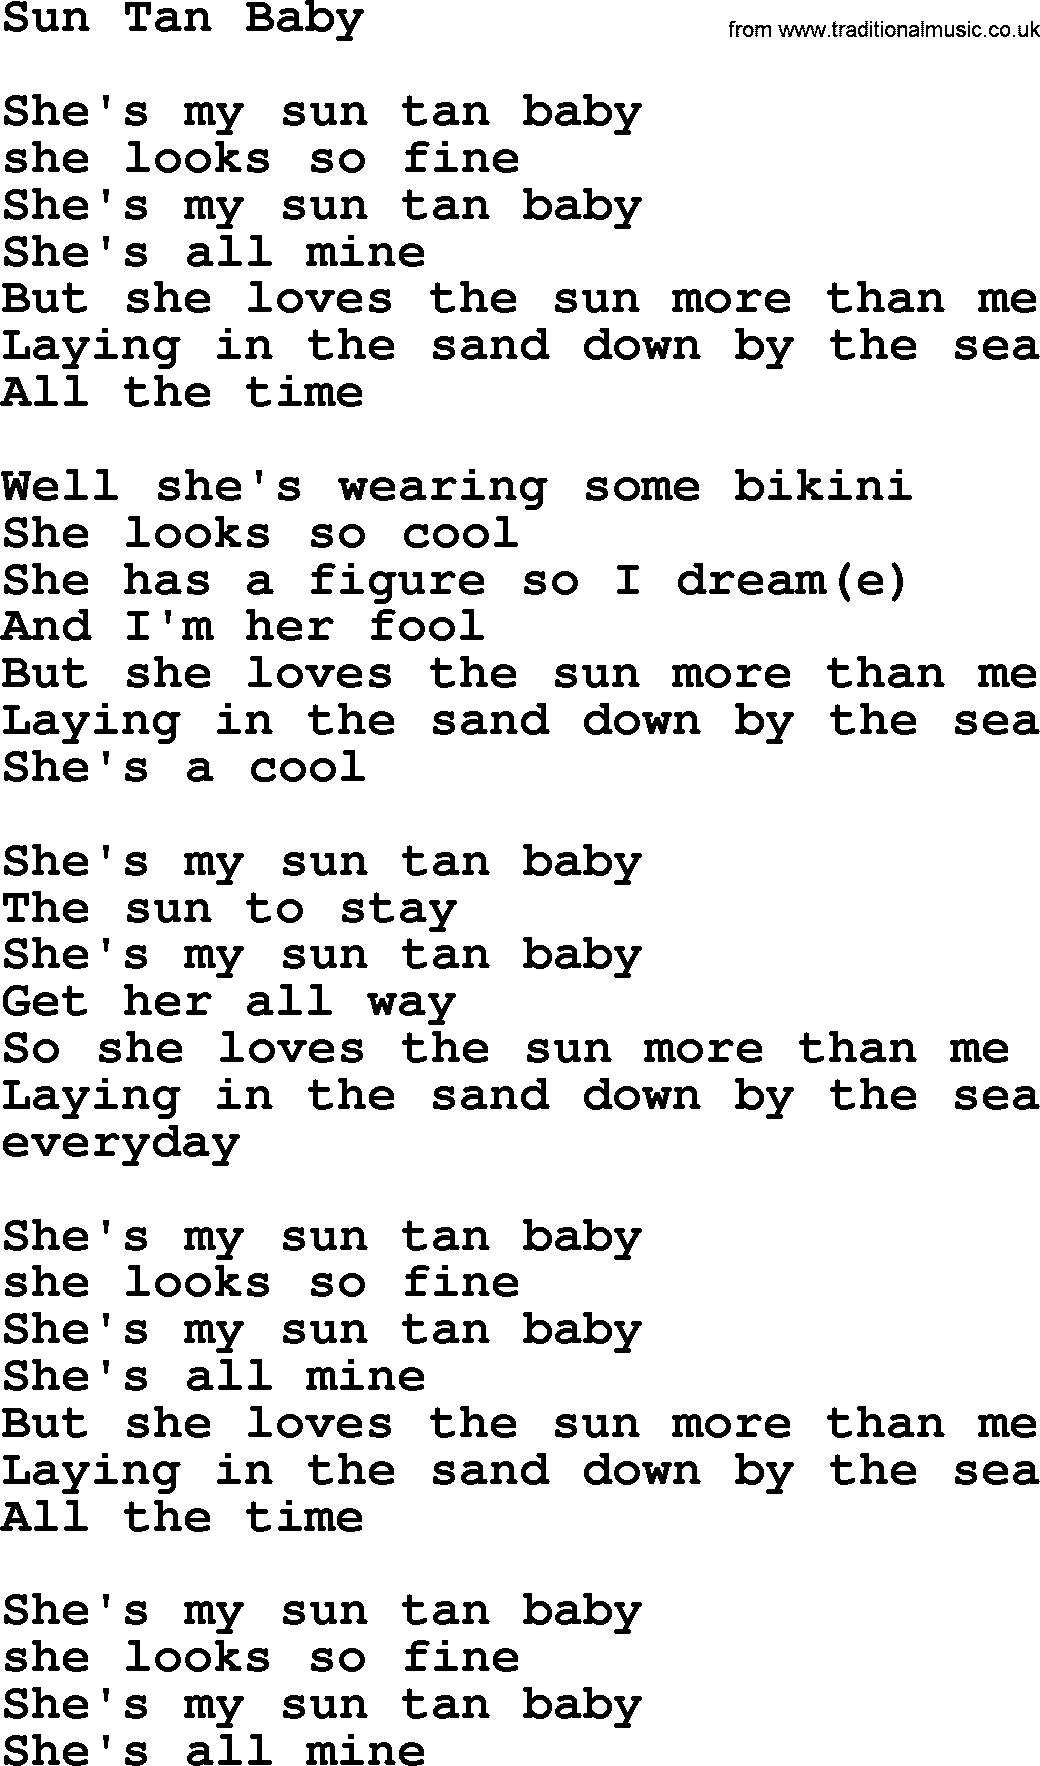 The Byrds song Sun Tan Baby, lyrics